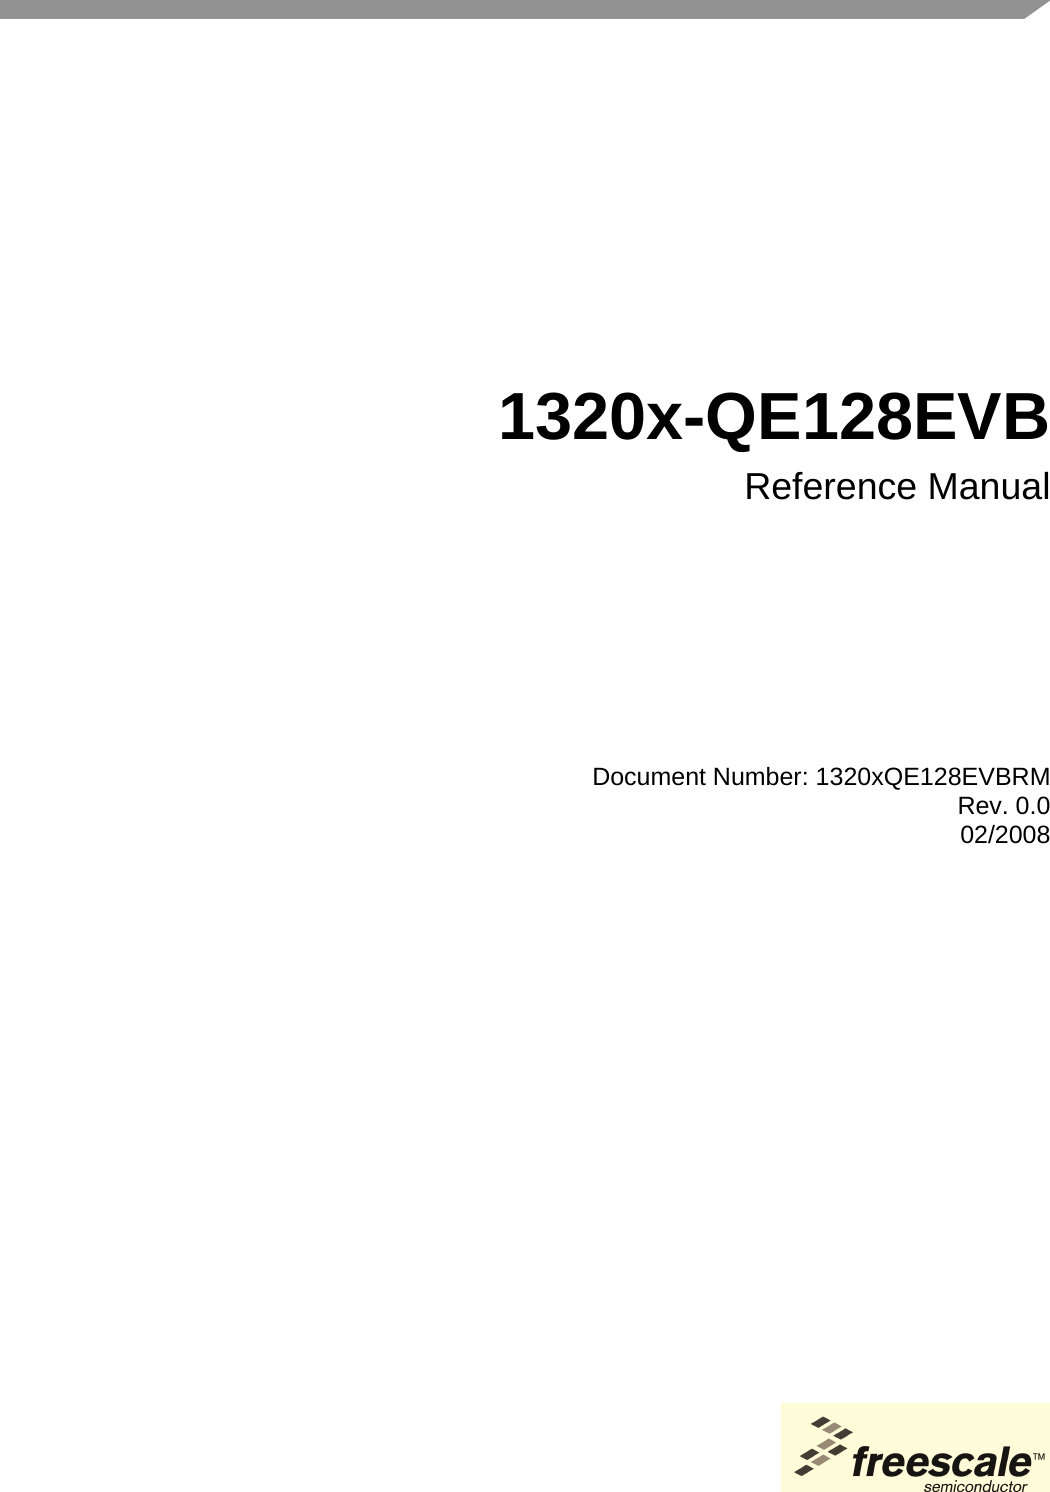 Document Number: 1320xQE128EVBRMRev. 0.002/2008 1320x-QE128EVBReference Manual